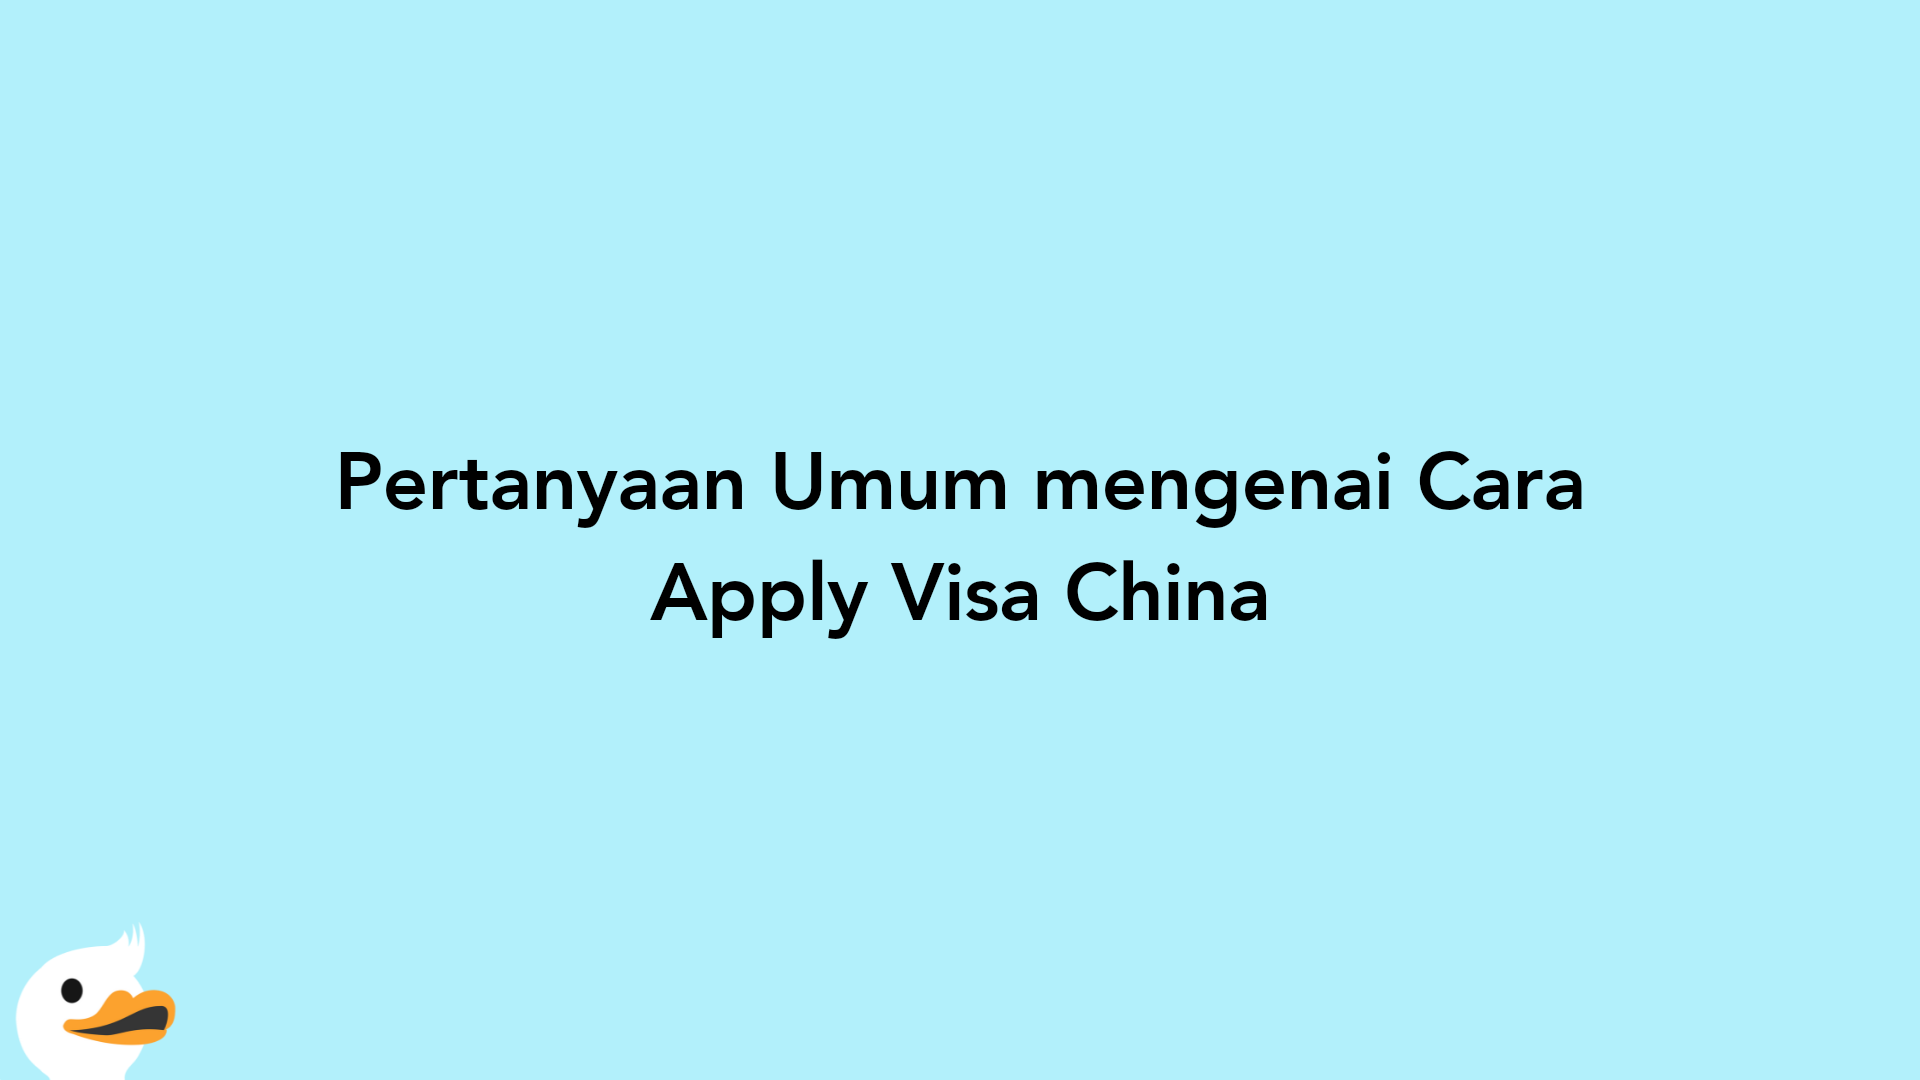 Pertanyaan Umum mengenai Cara Apply Visa China